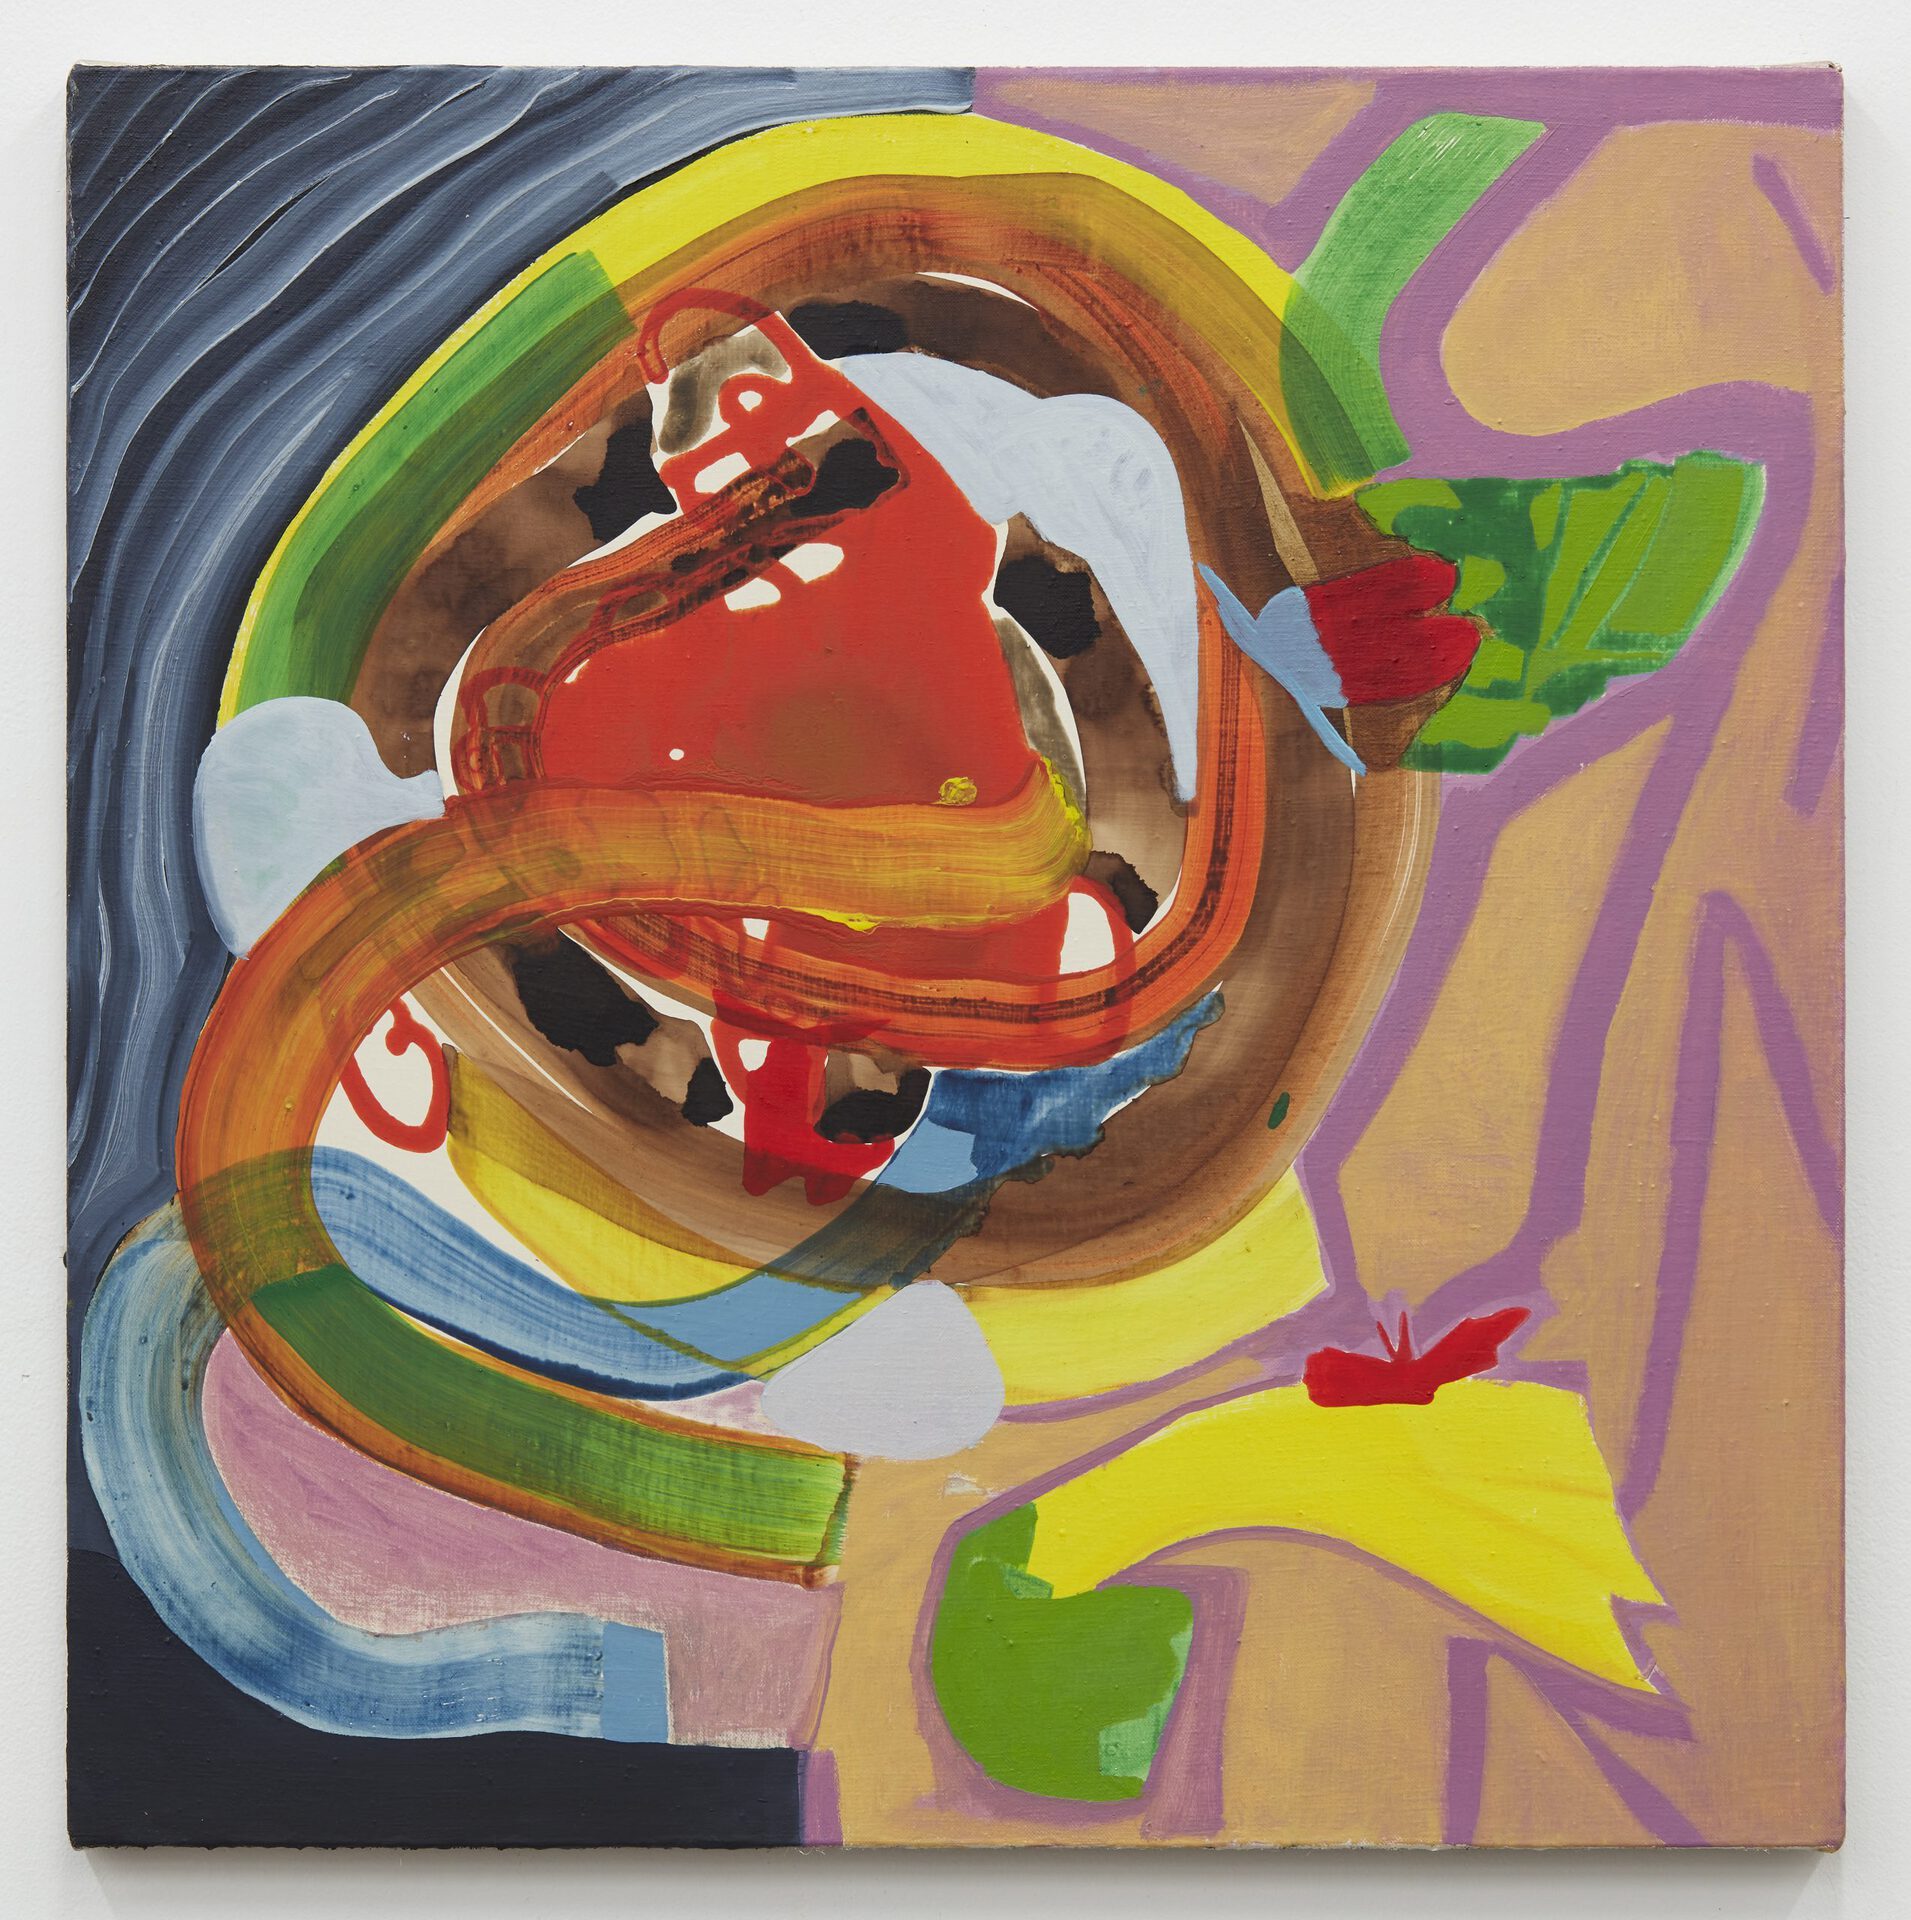 Marley Freeman, Fifth season, 2021, oil and acrylic on linen, 55,9 x 55,9 x 2,5 cm